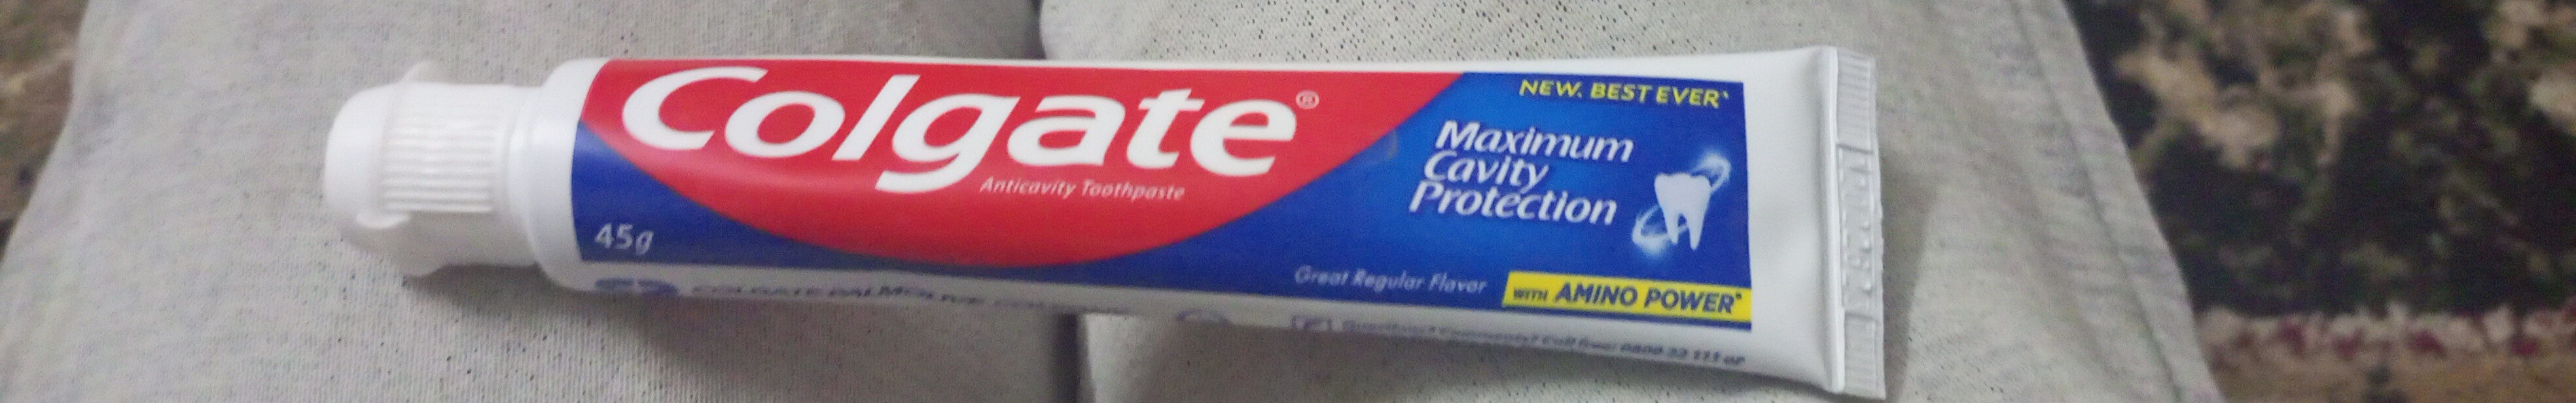 Colgate anticavity toothpaste - 製品 - en